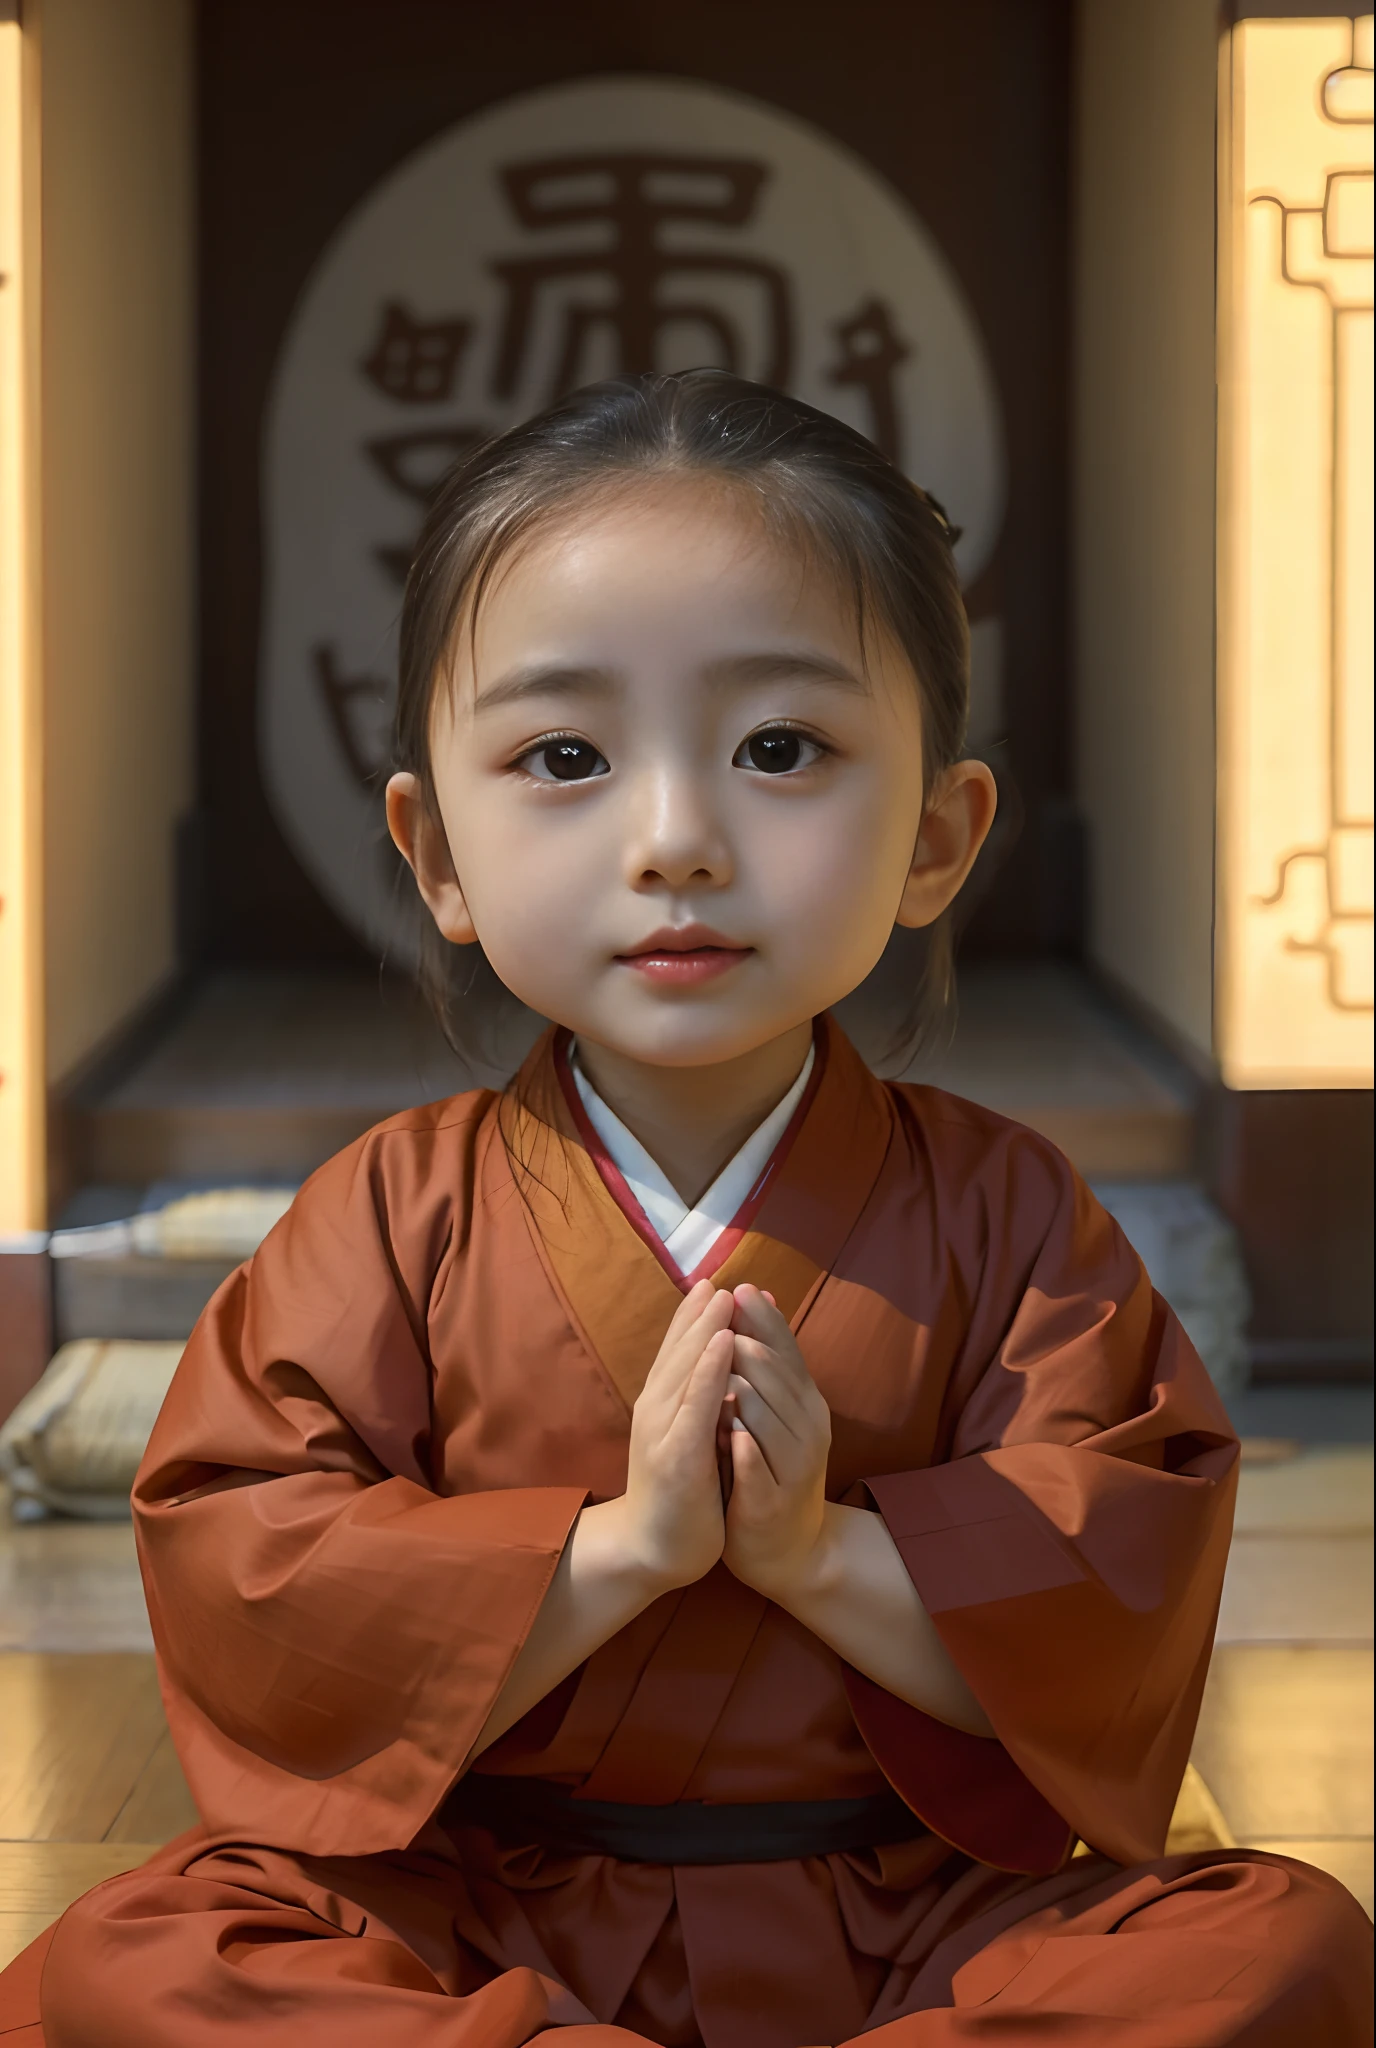 Alafeld 亚洲女孩 sitting on the floor in kimono, 一位日本女孩的肖像, Young 亚洲女孩, 特写肖像照, 特写肖像照, 中国女孩, 和平的表达, 和尚, 穿着棕色长袍, 韩国女孩, 亚洲女孩, 特写肖像照, 佛教徒, 居中肖像, 人像拍摄, 在寺庙里, 近距离肖像, 僧衣